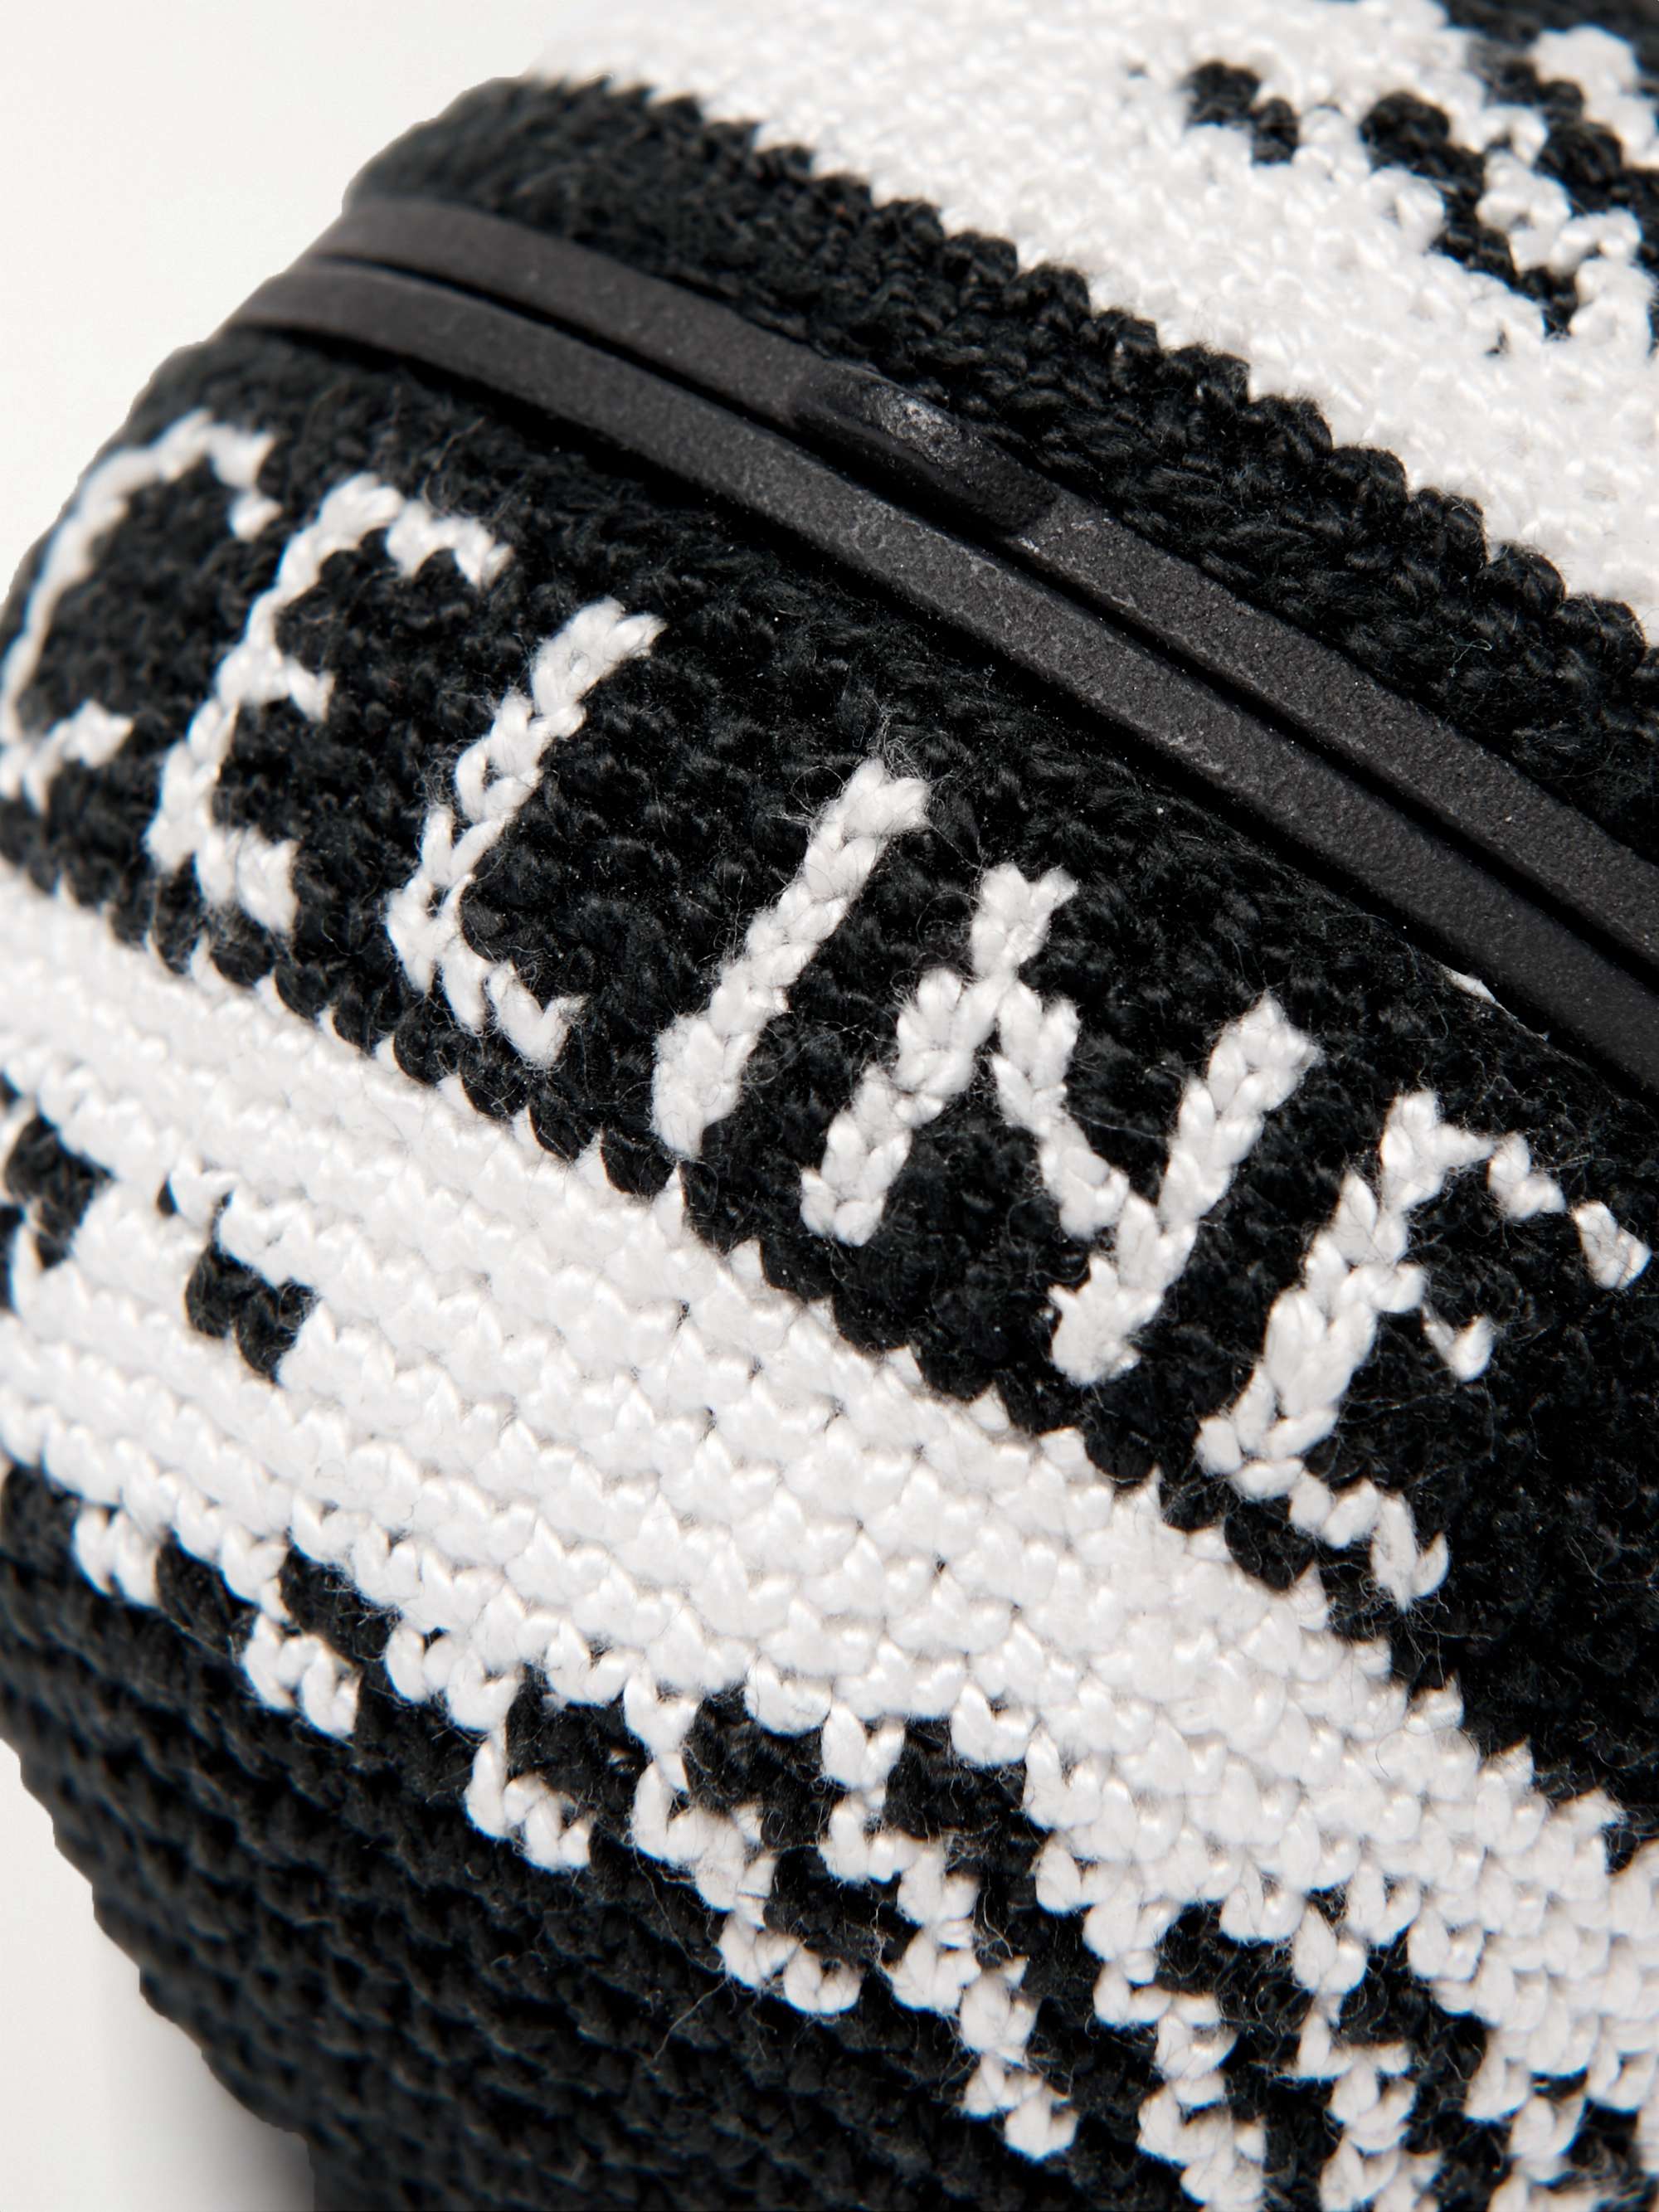 CELINE HOMME Logo-Jacquard Crocheted AirPods Case